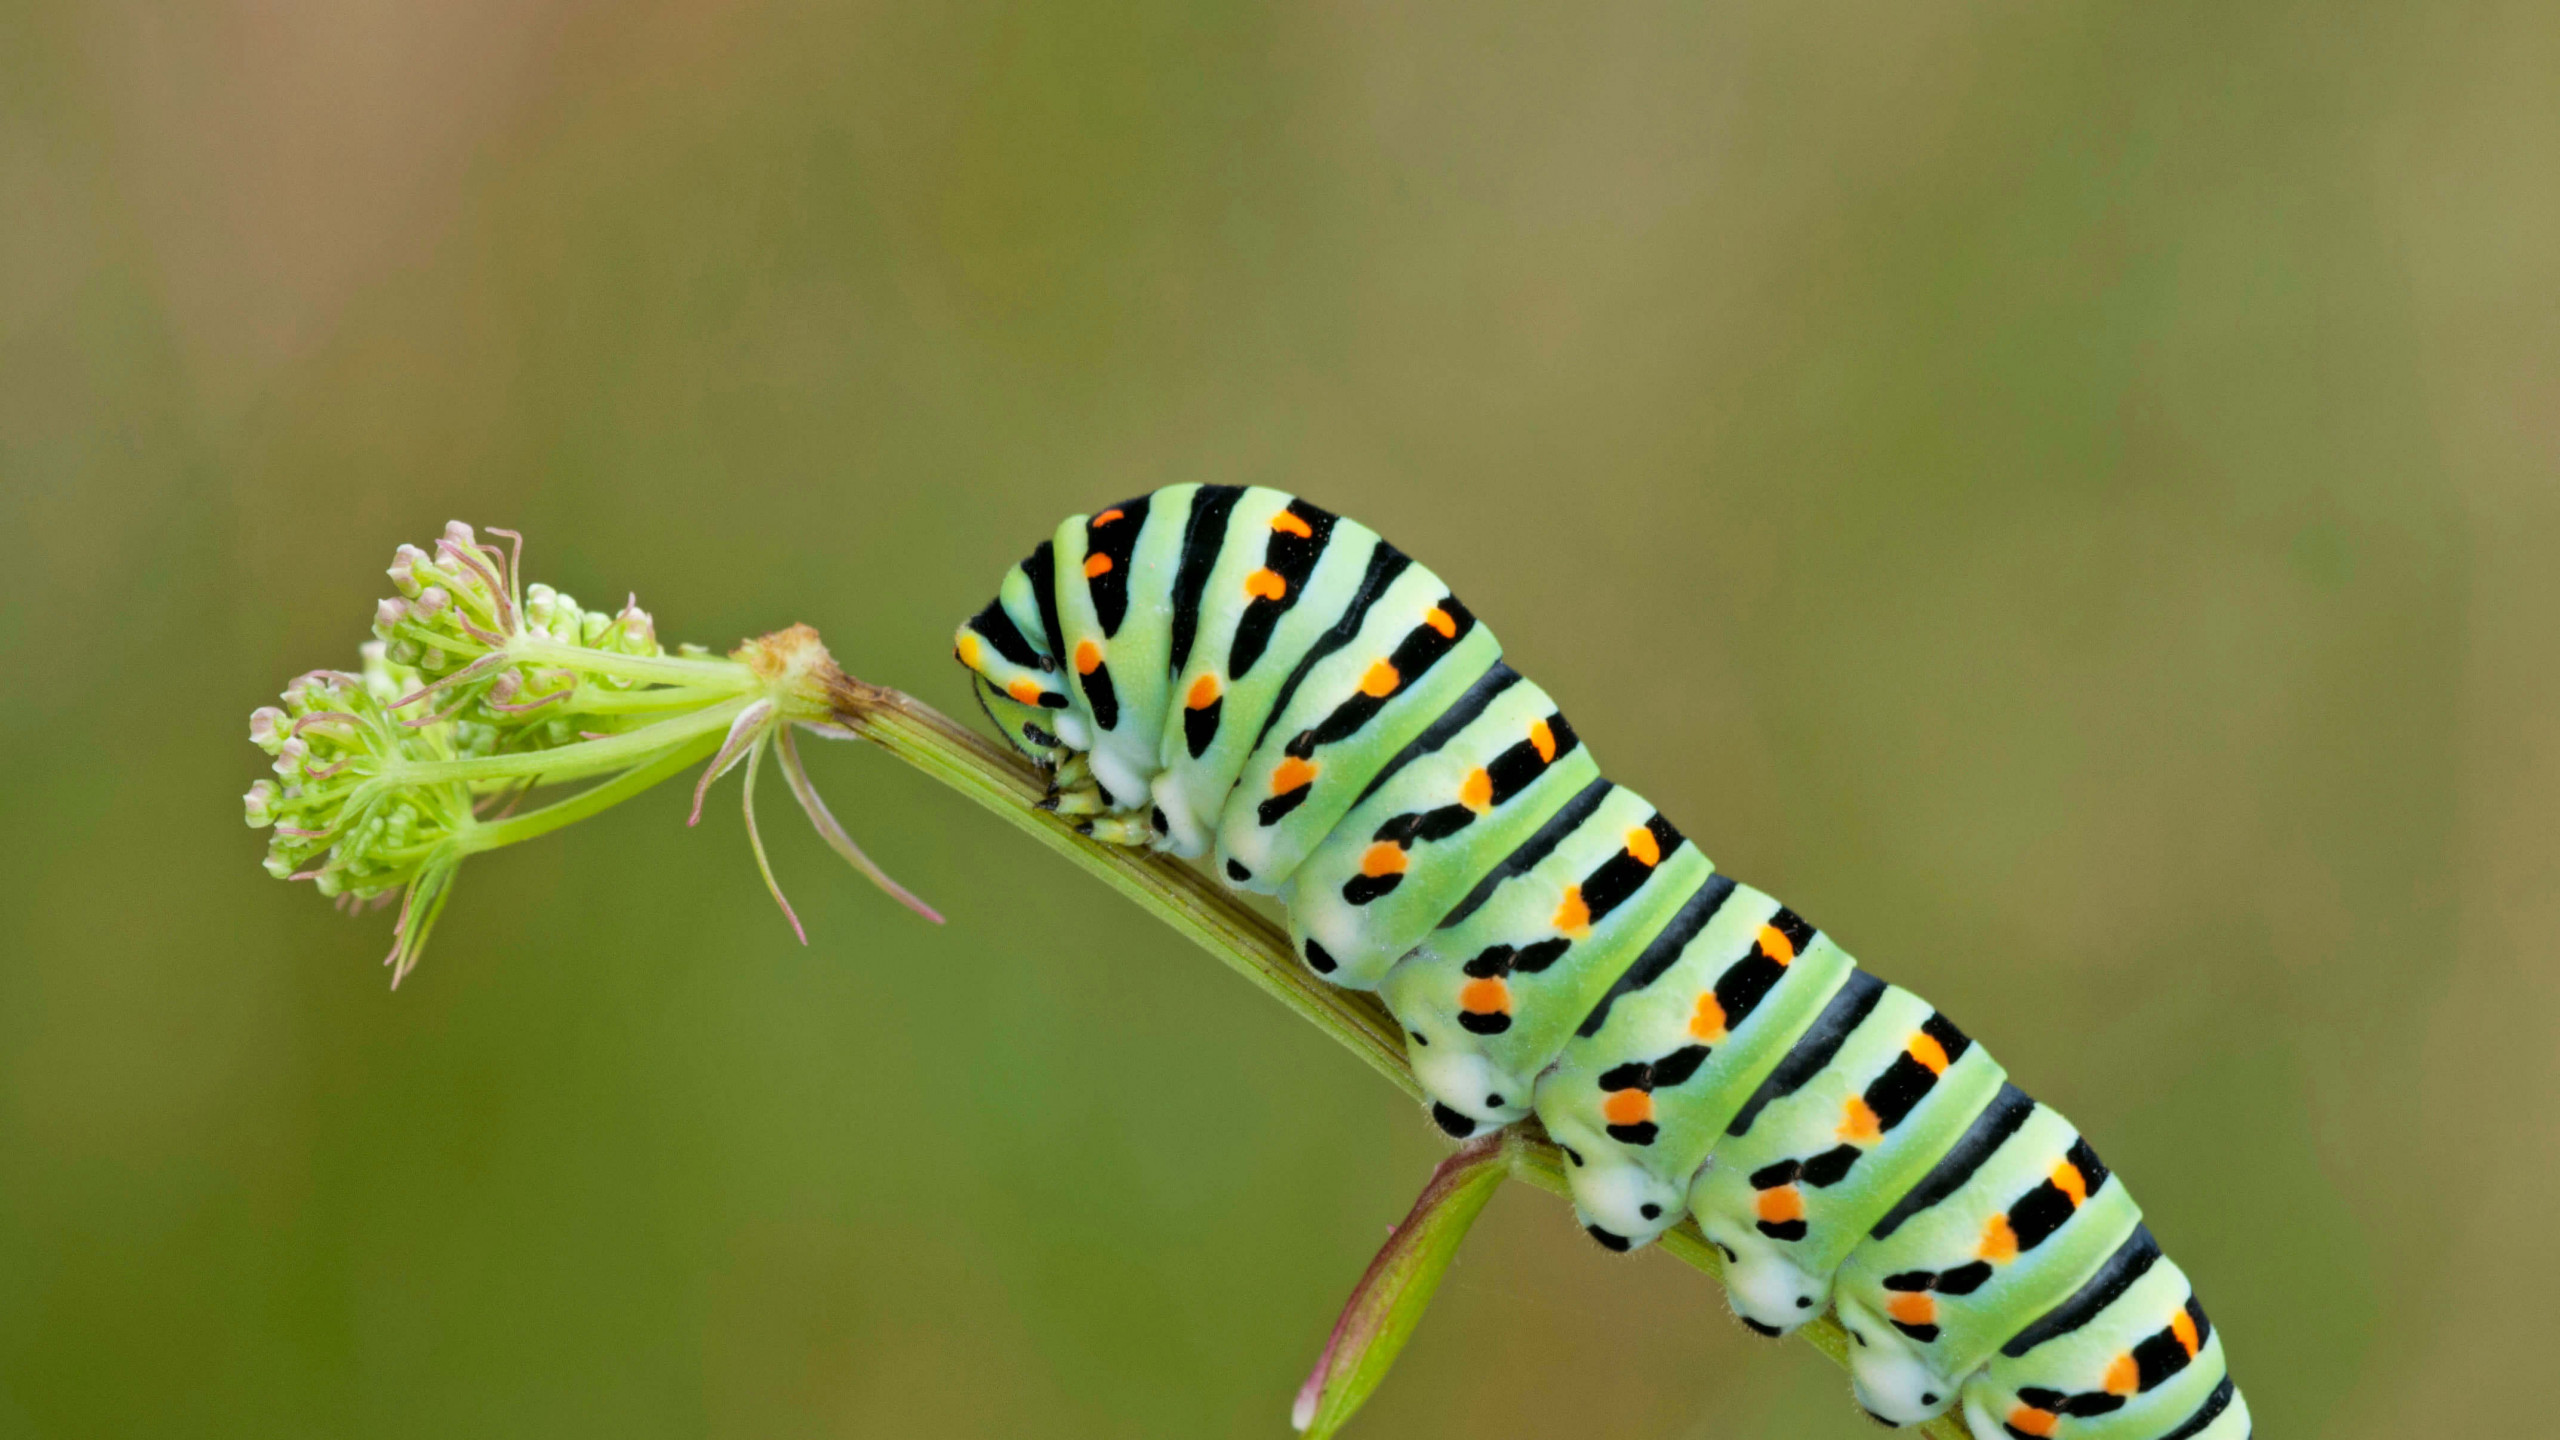 Green Caterpillar гусеница бабочки